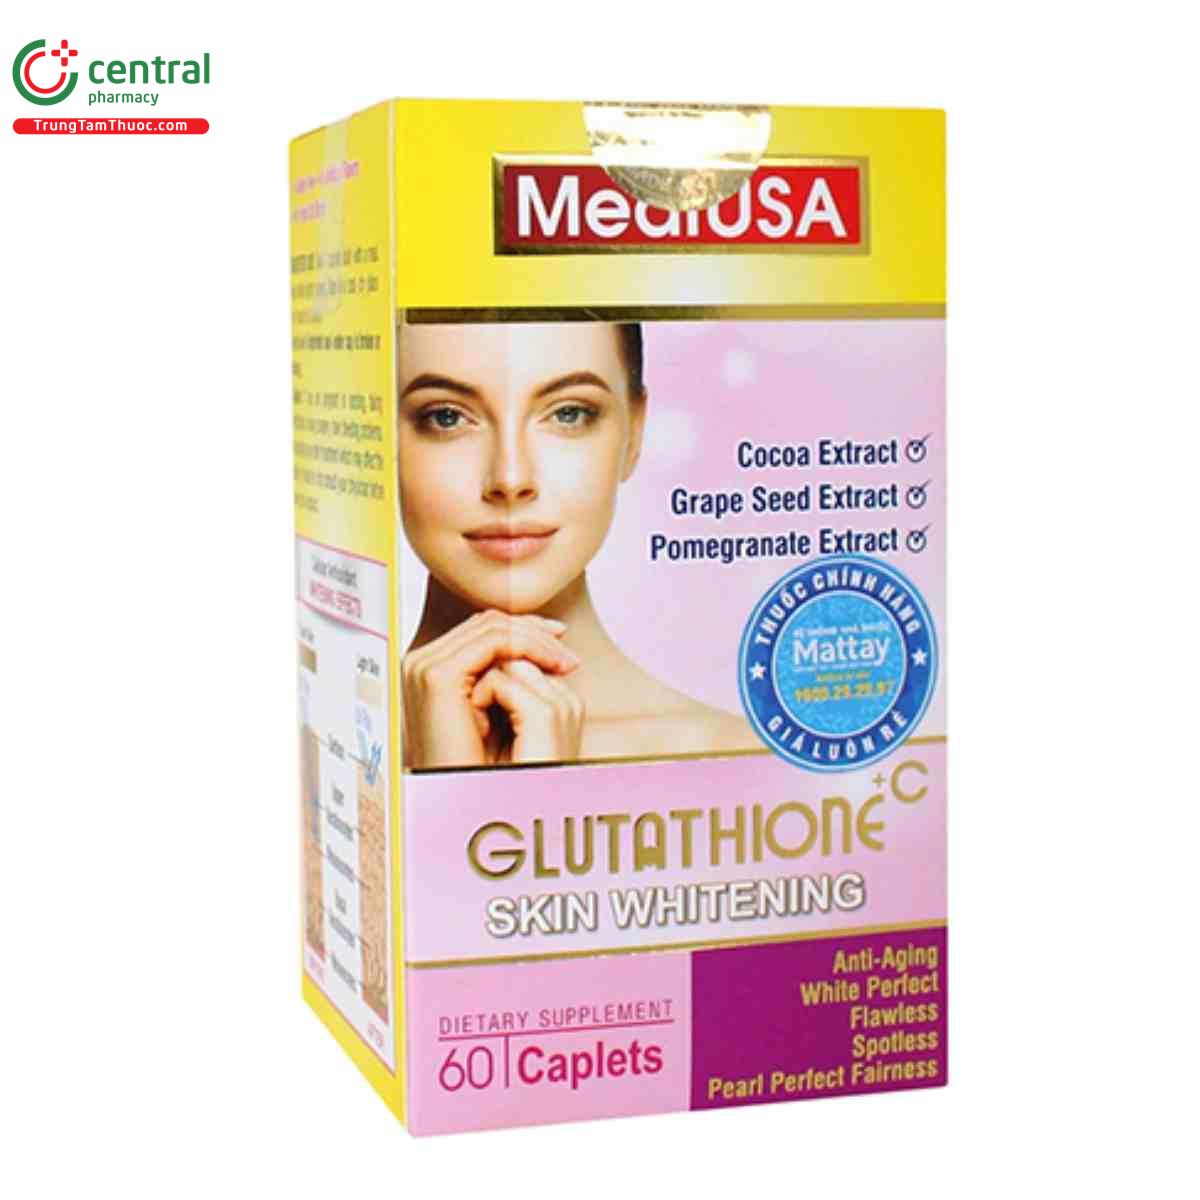 mediusa glutathione skin whitening 2 L4145